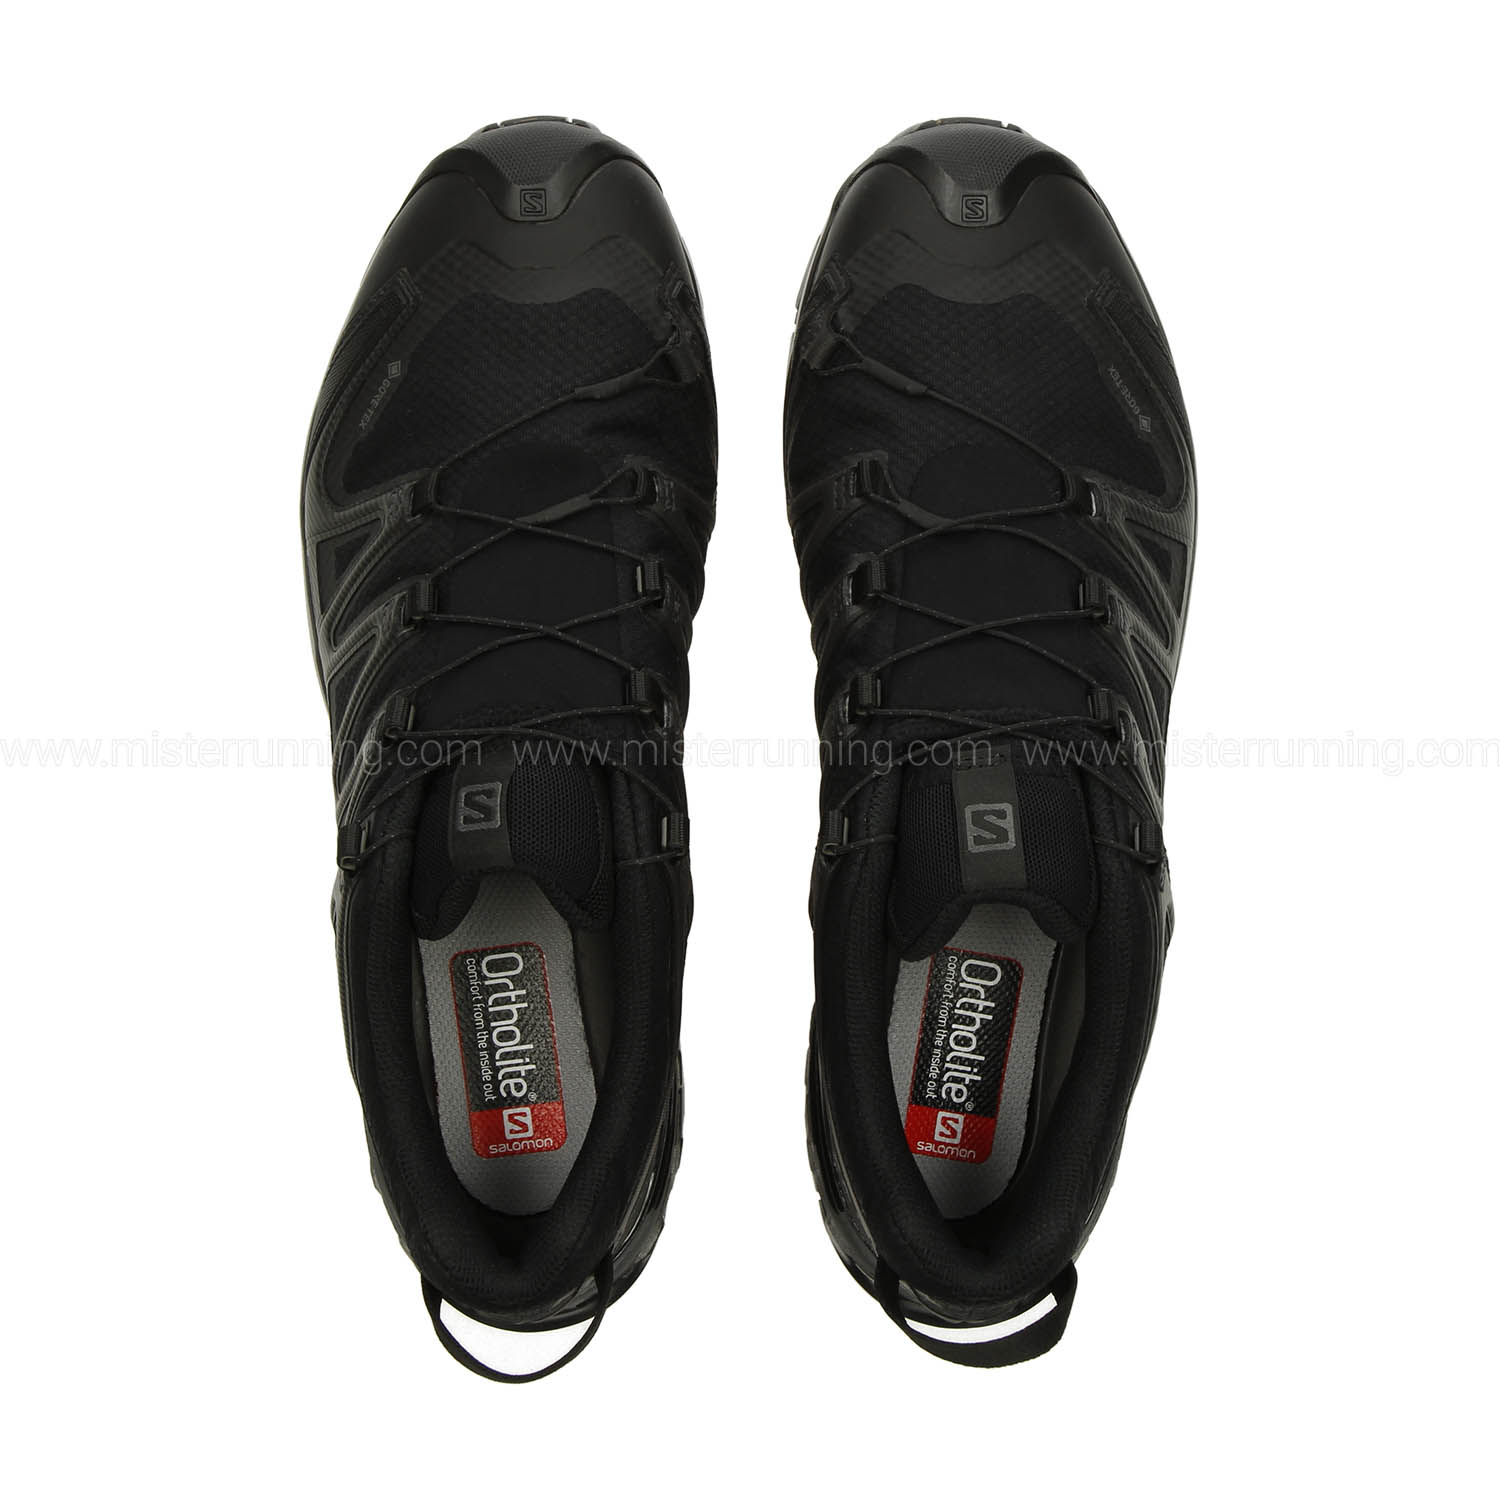 Salomon XA Pro 3D V8 GTX Women's Hiking Shoes - Black/Phantom